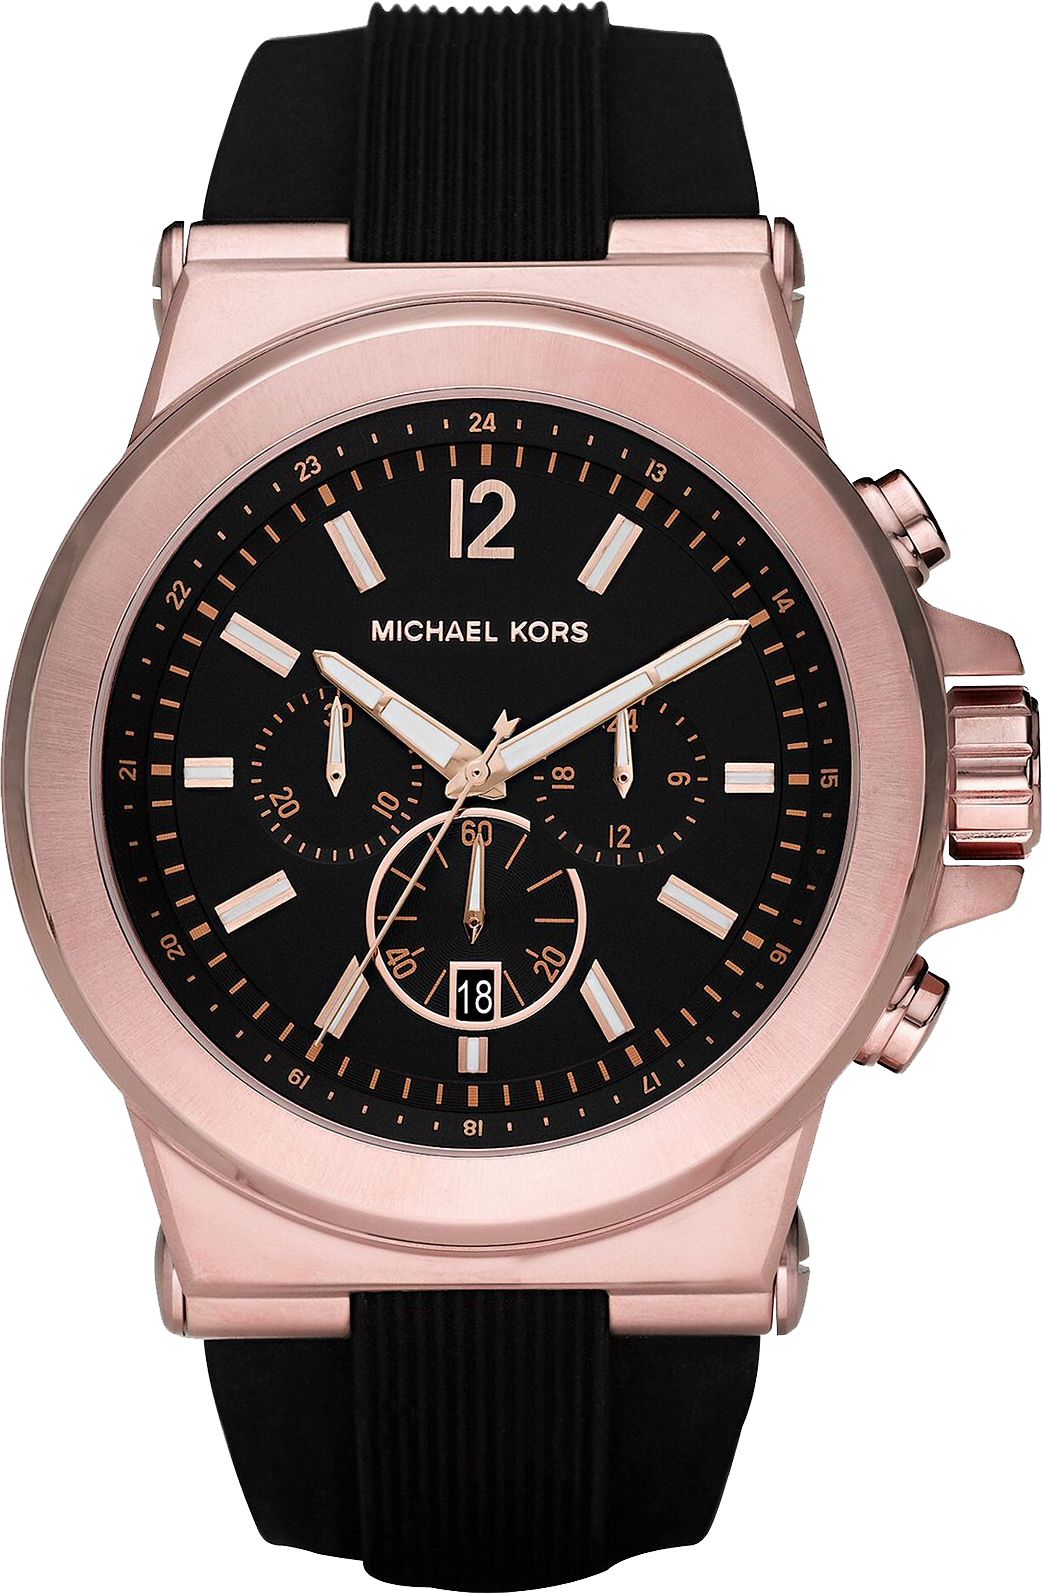 Actualizar 94+ imagen michael kors rose gold mens watch - Abzlocal.mx